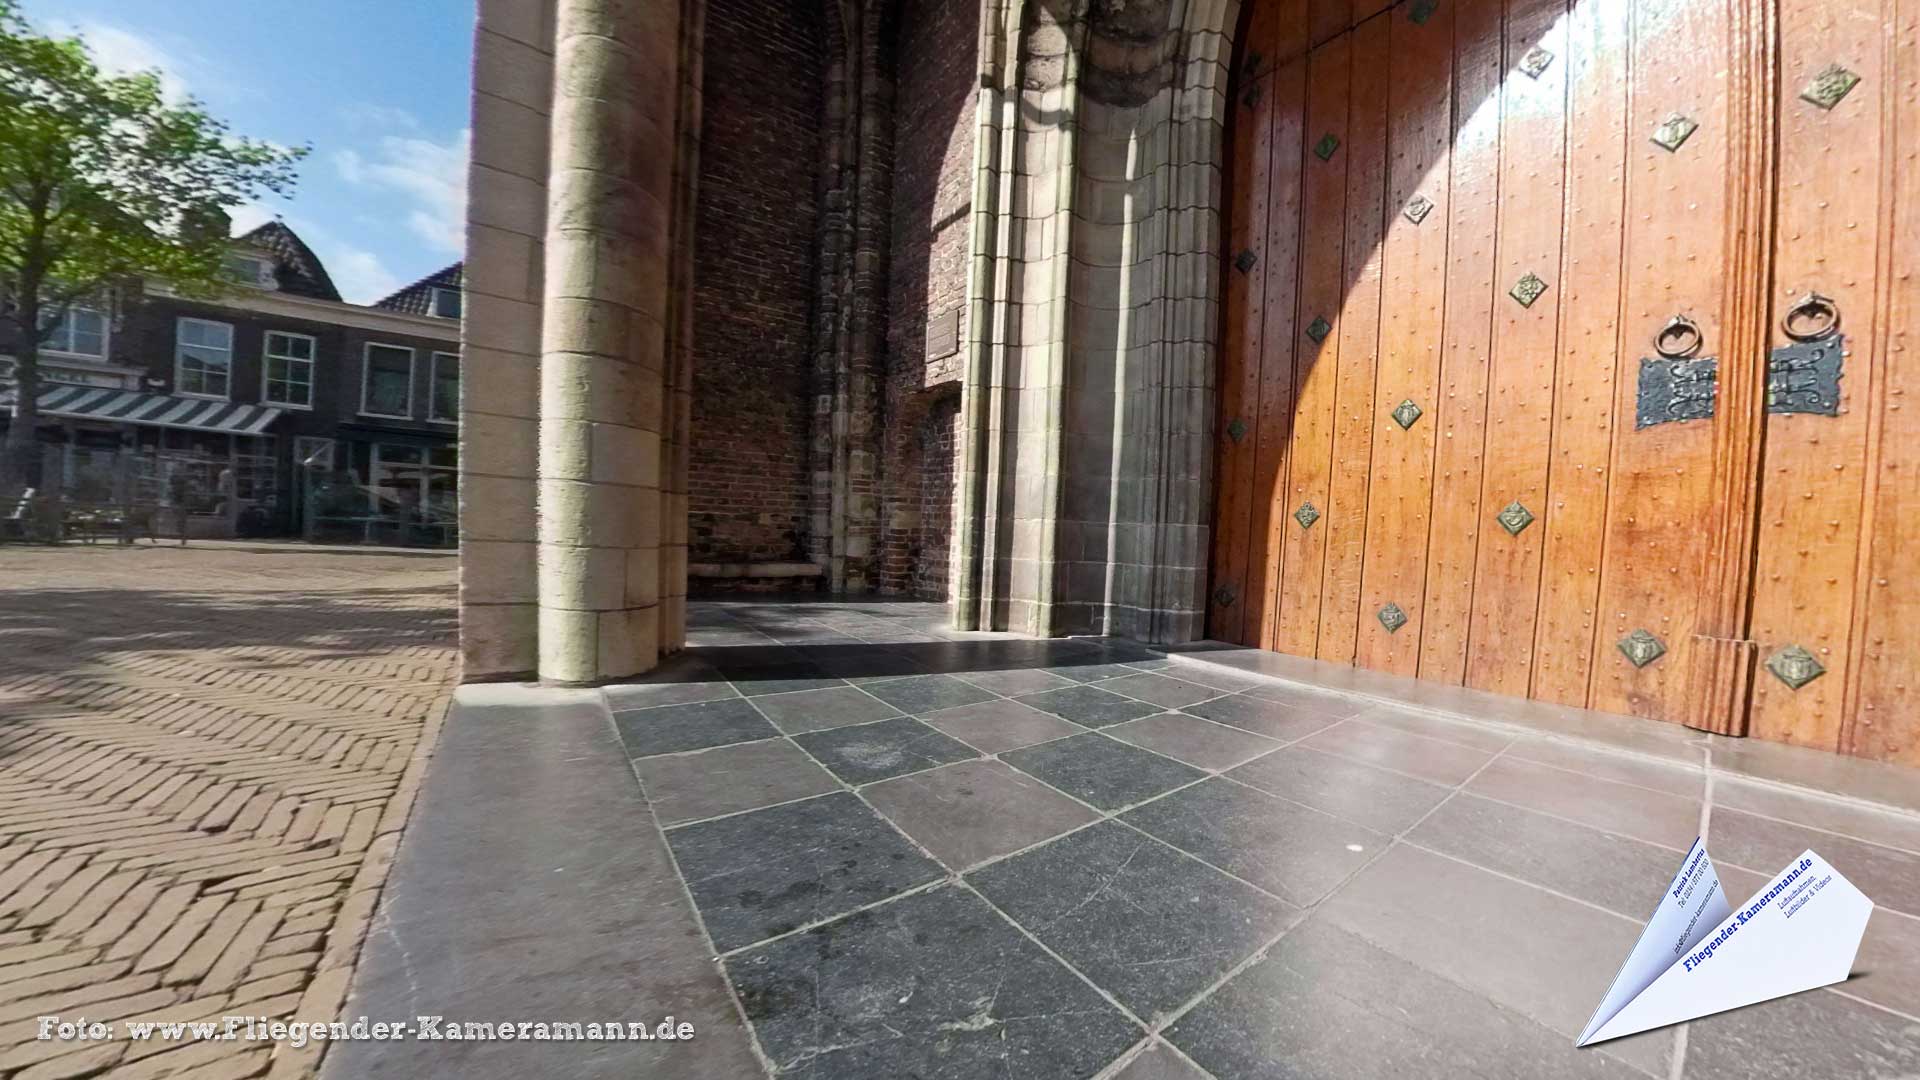 Kerktoren Nieuwe Kerk in Delft (NL) - 360°-Panorama